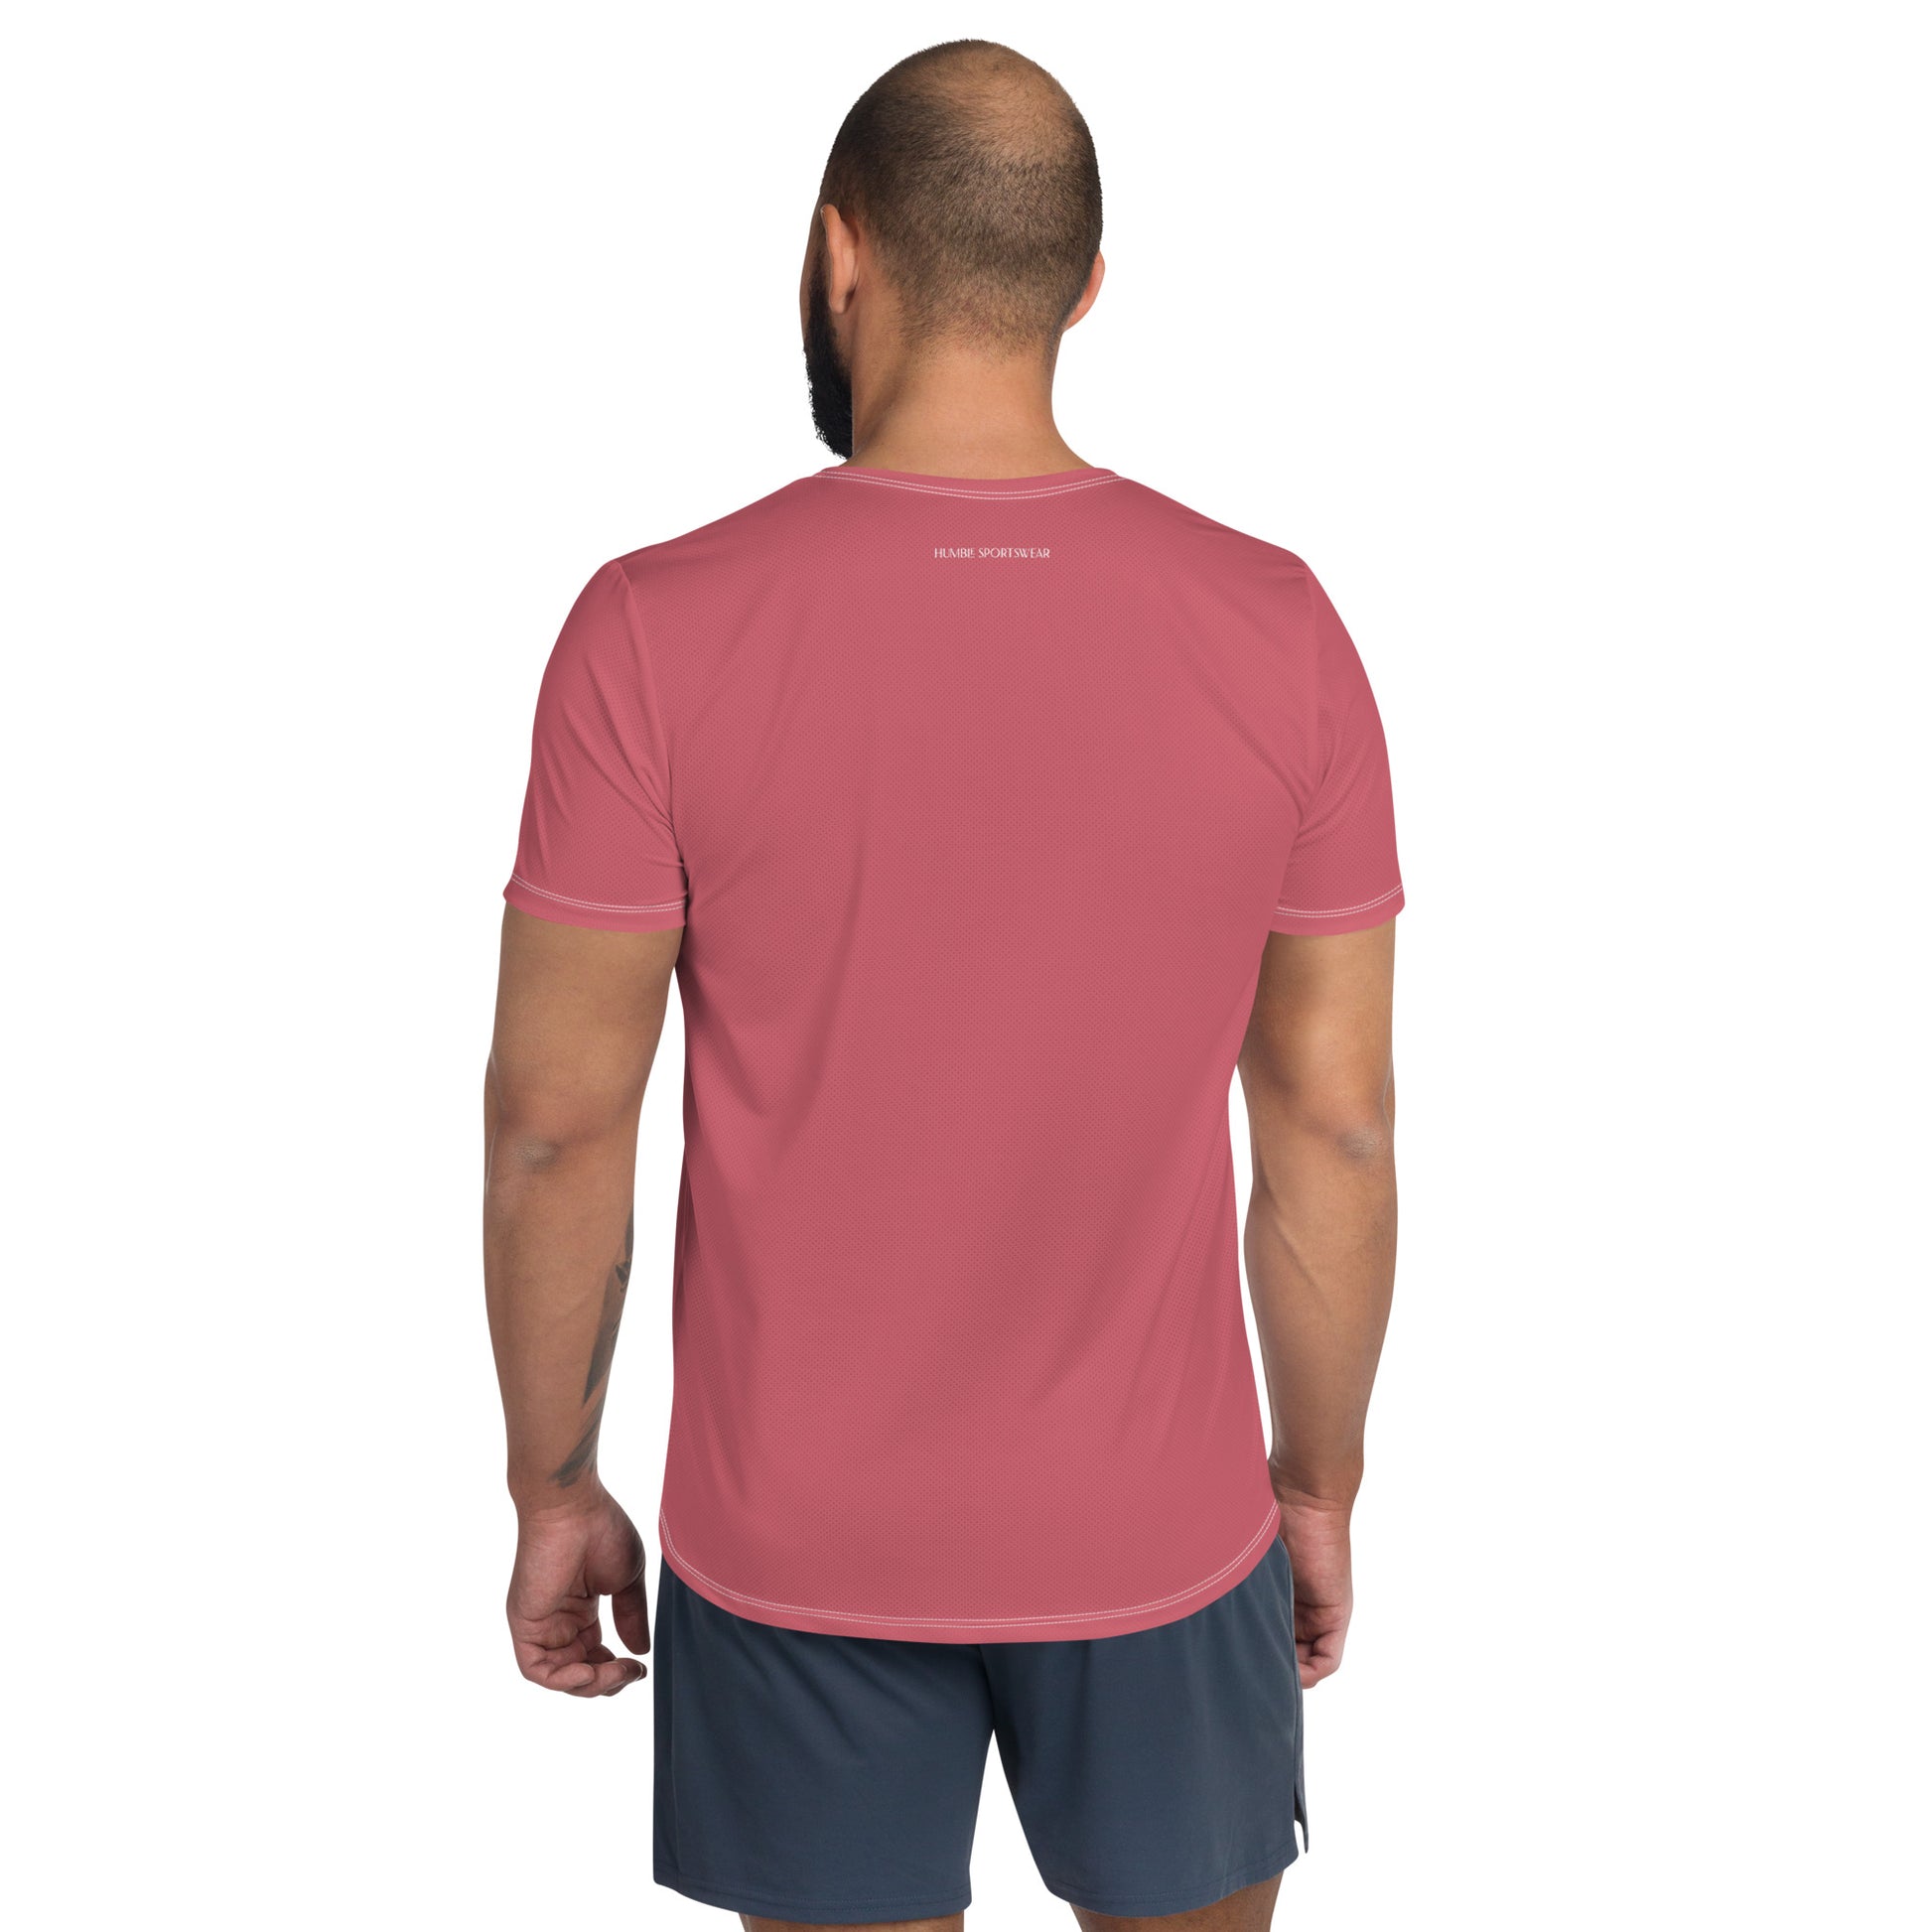 Humble Sportswear, men's mesh athletic color match gym t-shirt 